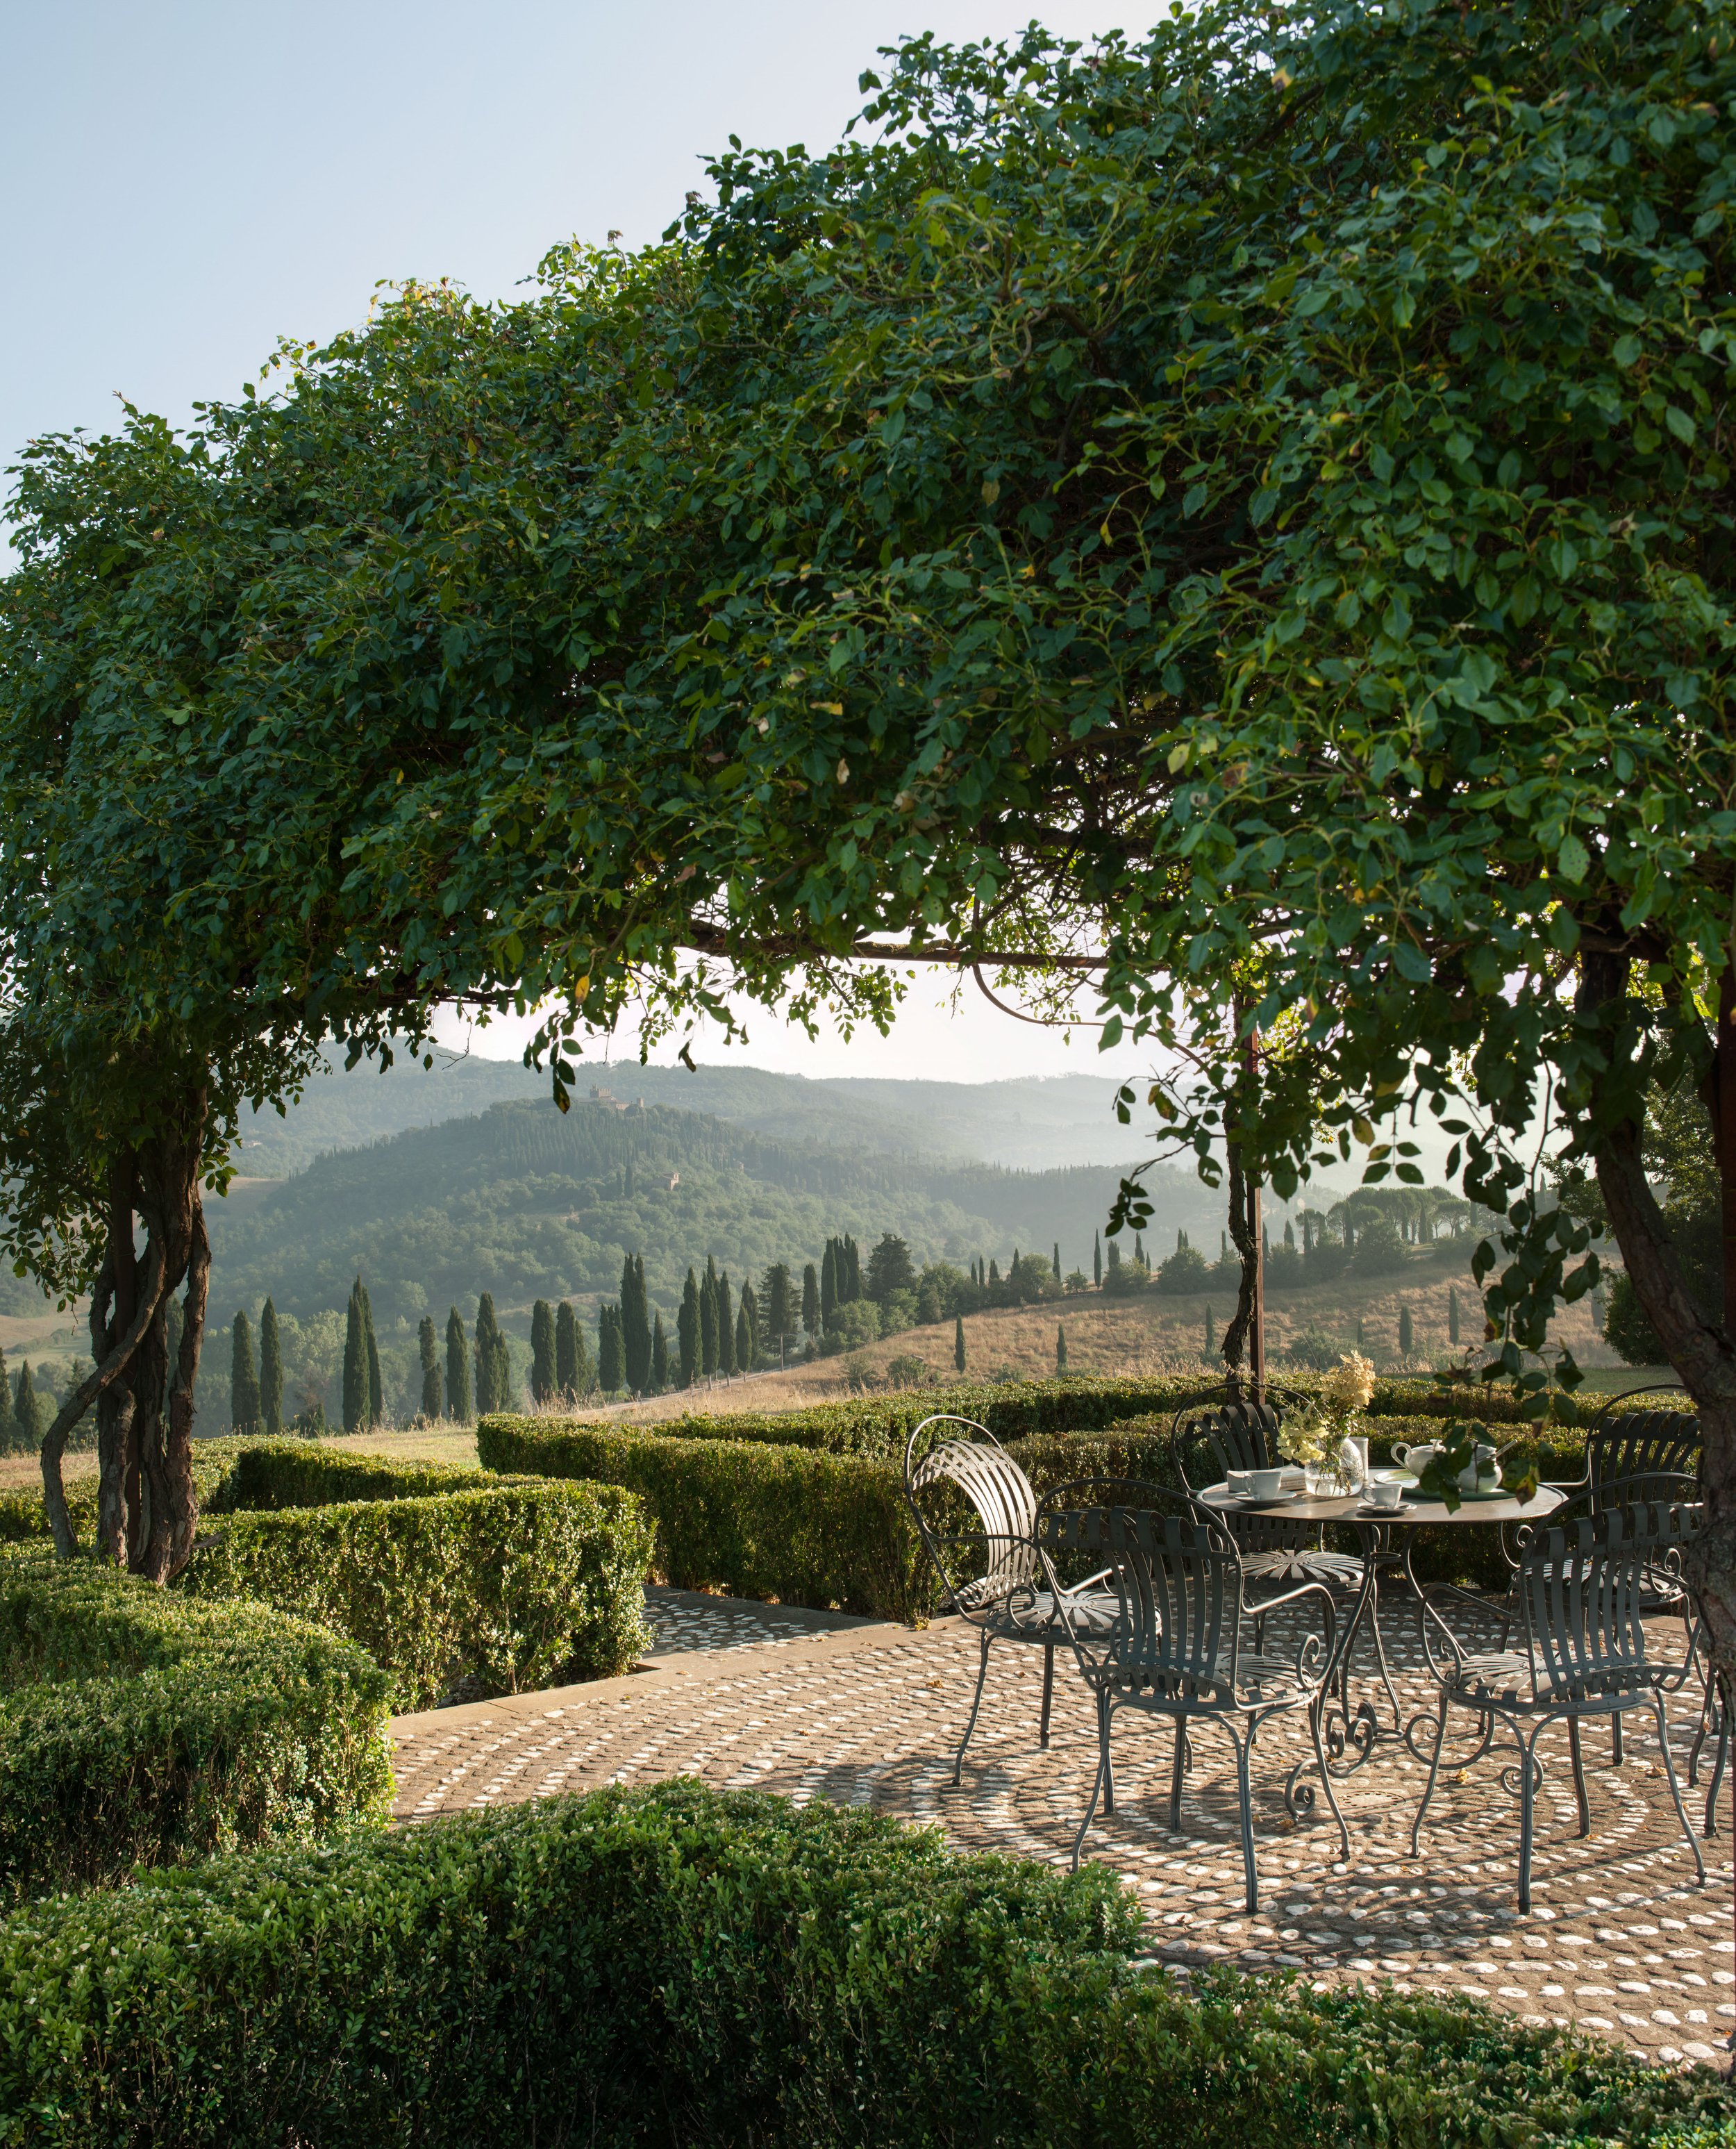 Francis York Exclusive Luxury Villa Rental in Umbria, Italy 5.jpg